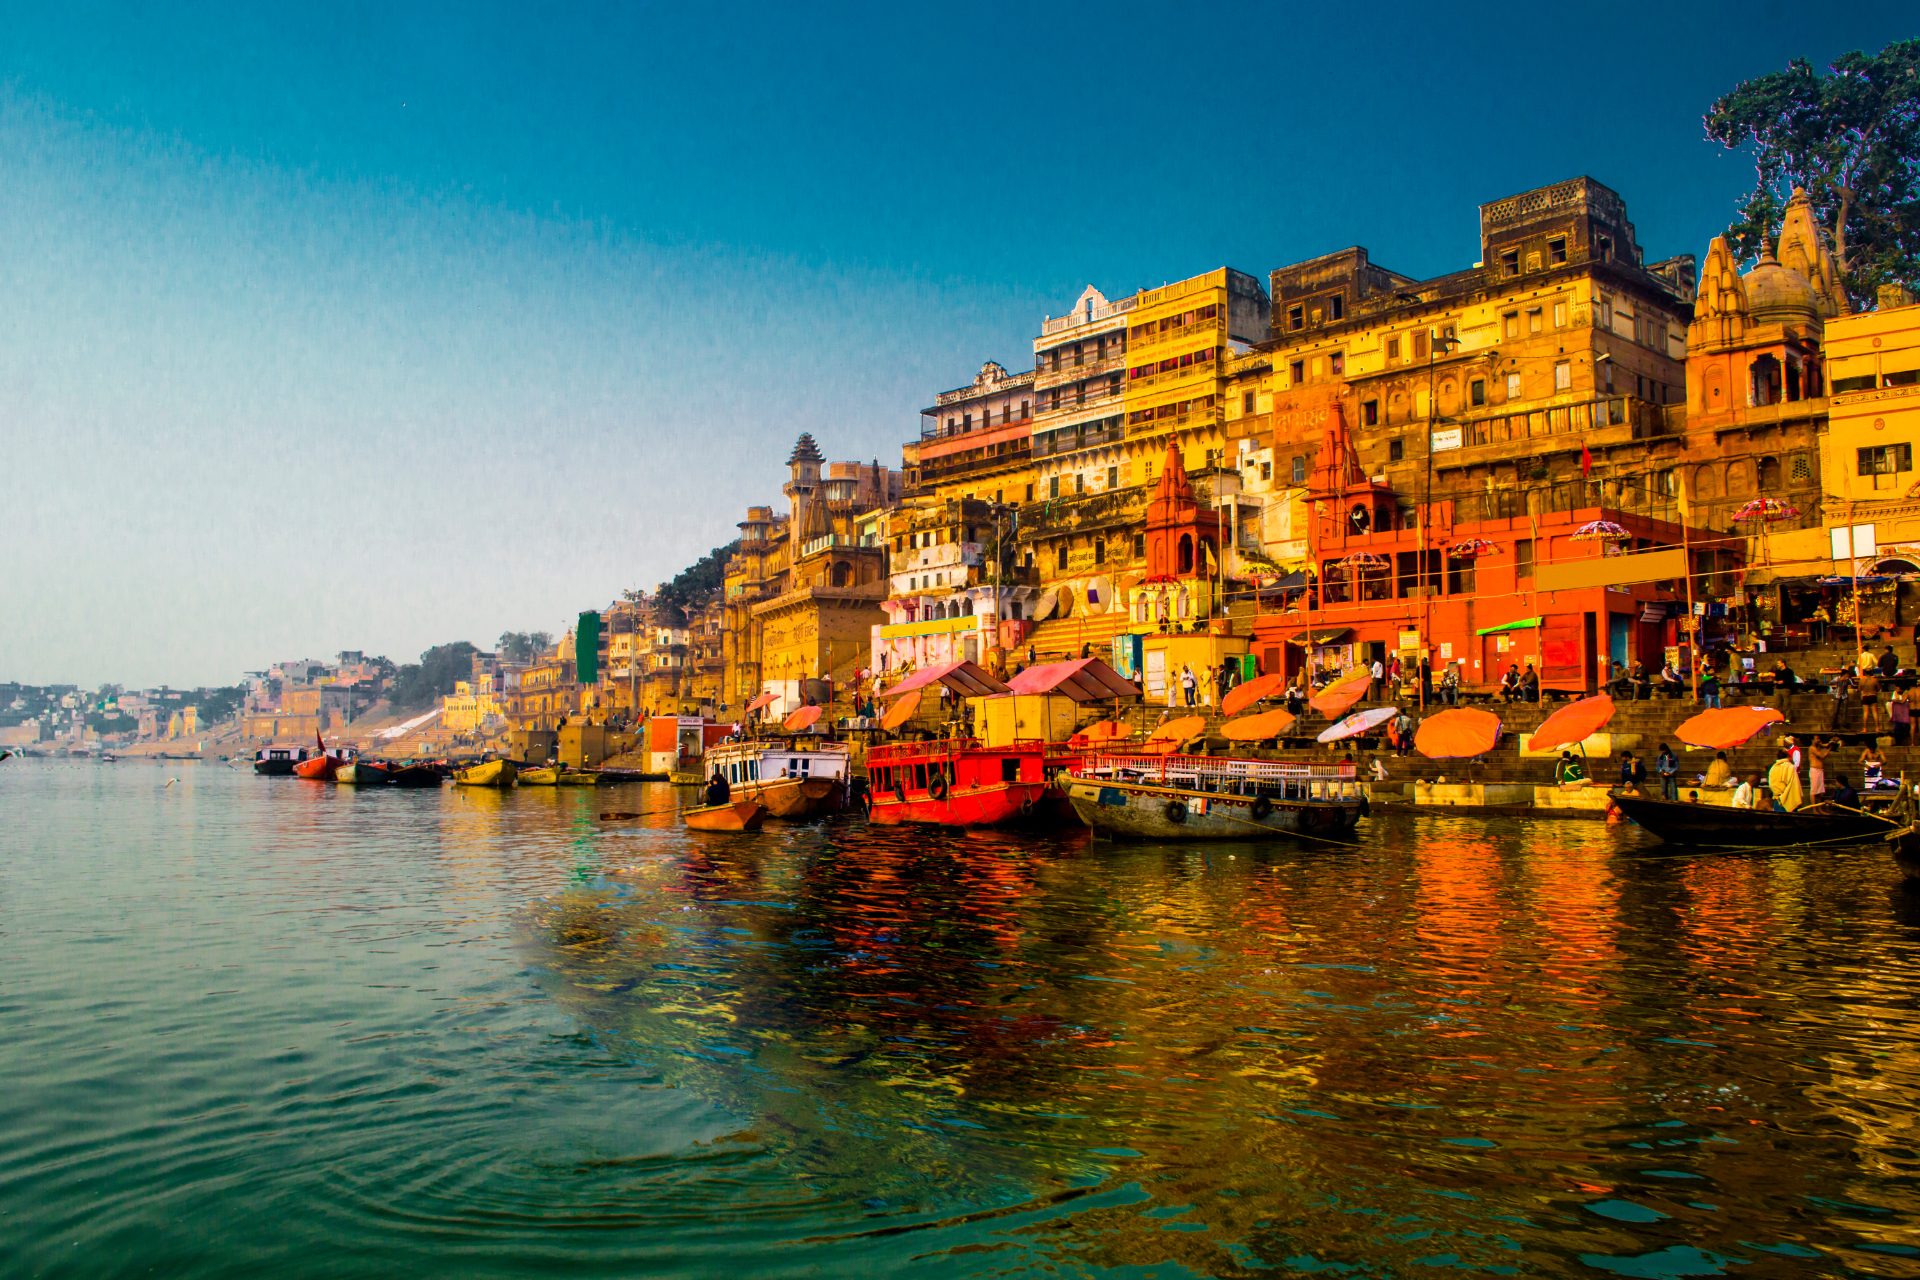 A photograph of building along the riverbank in Varanasi, India taken at sunrise.